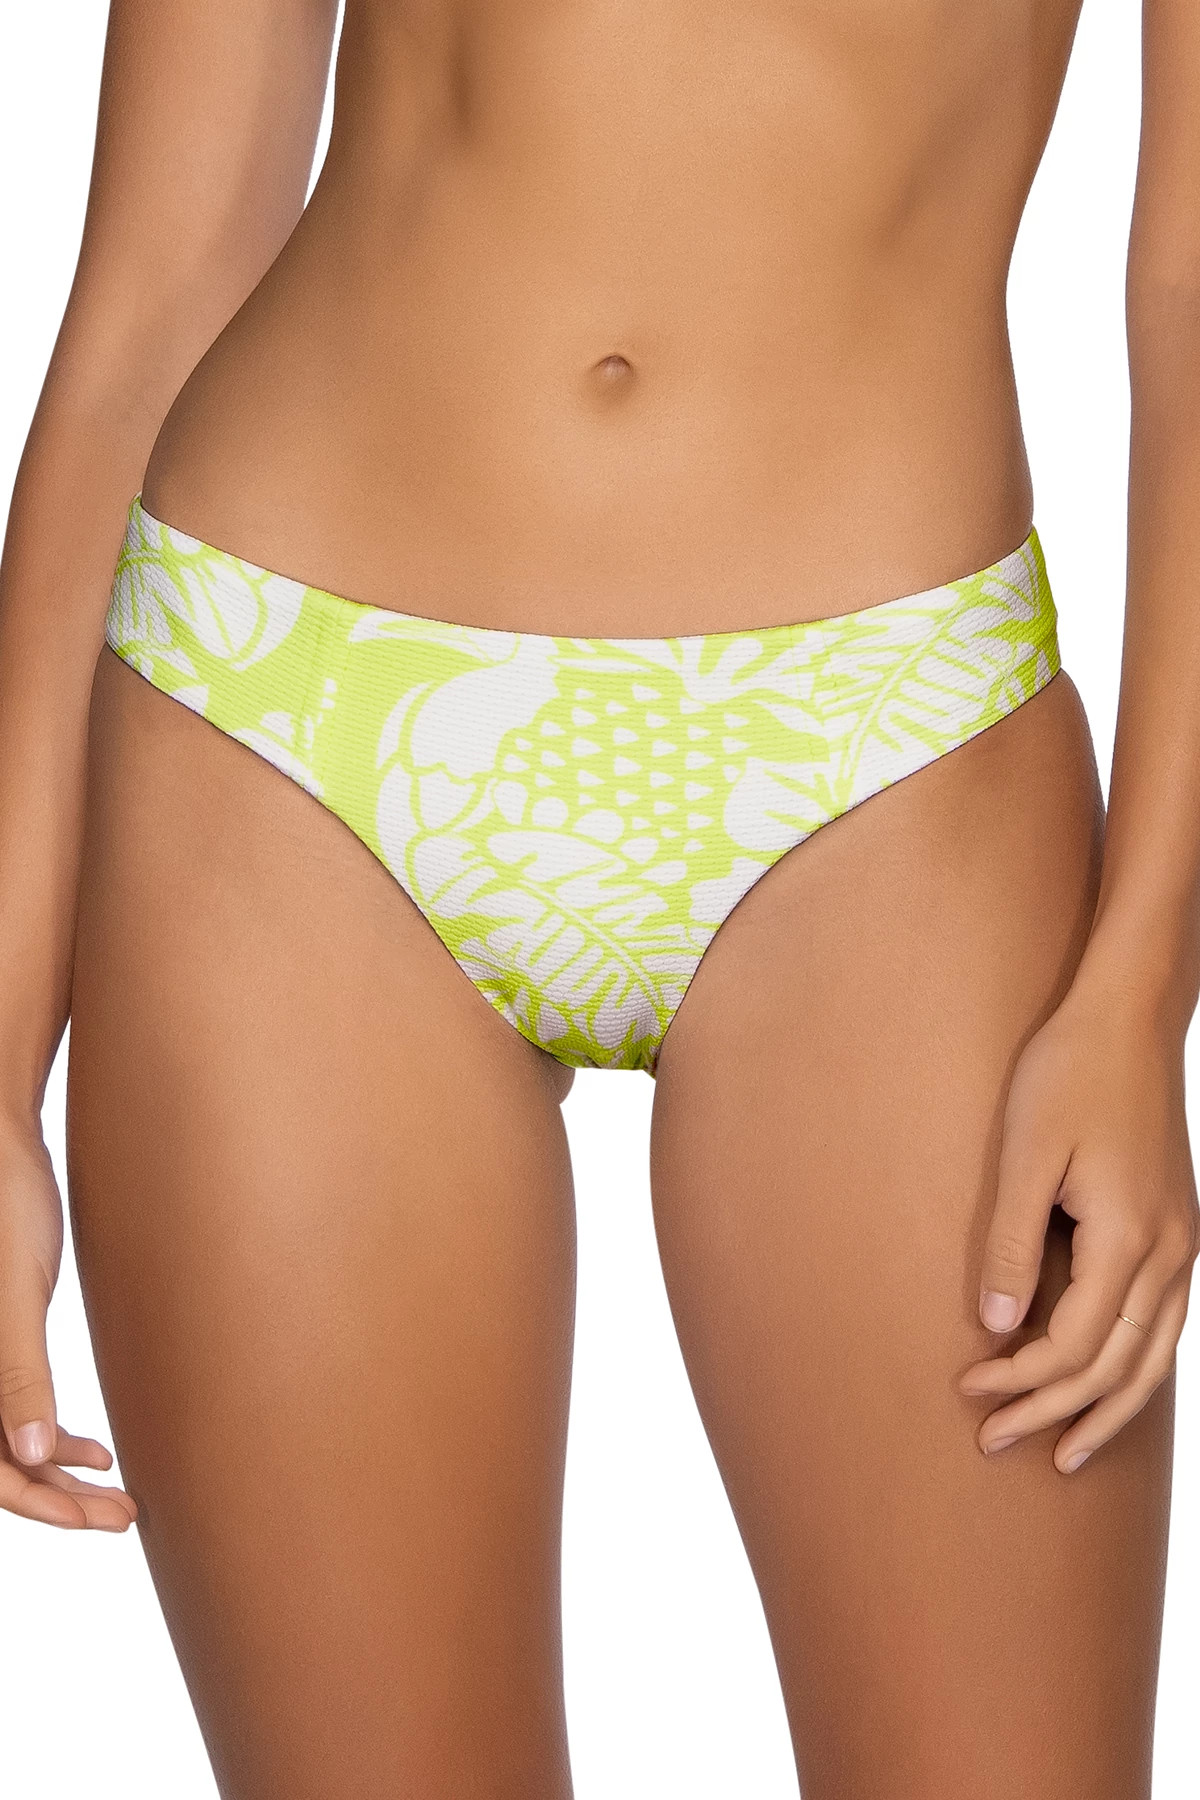 KEY LARGO Shoreline Brazilian Bikini Bottom image number 1